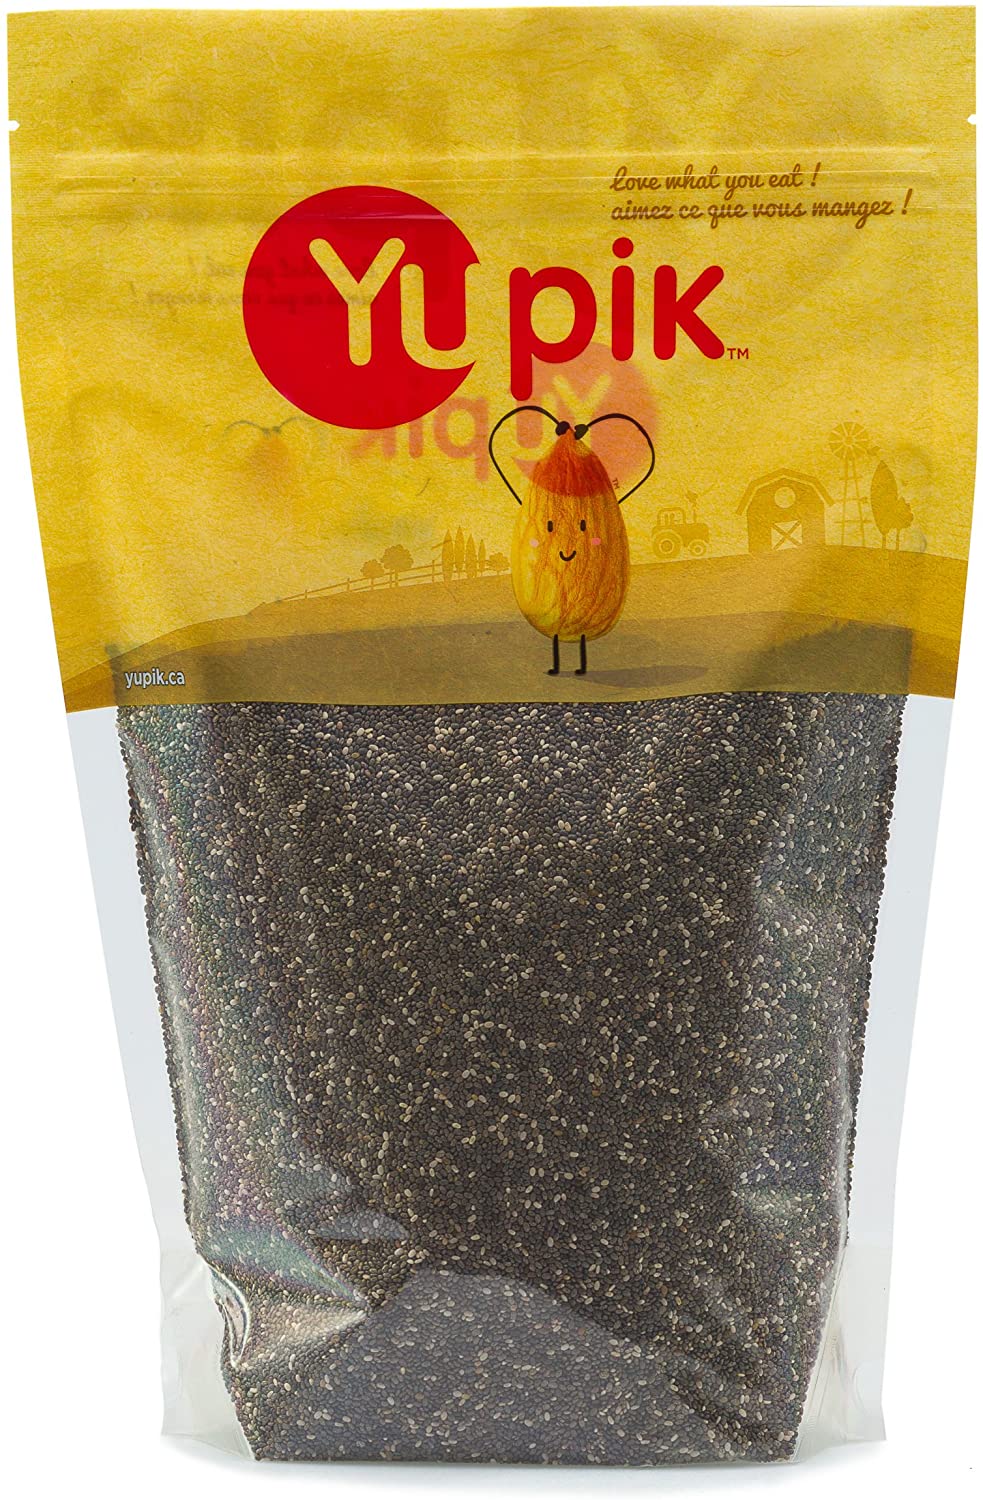 Yupik Black Chia Seeds 1kg